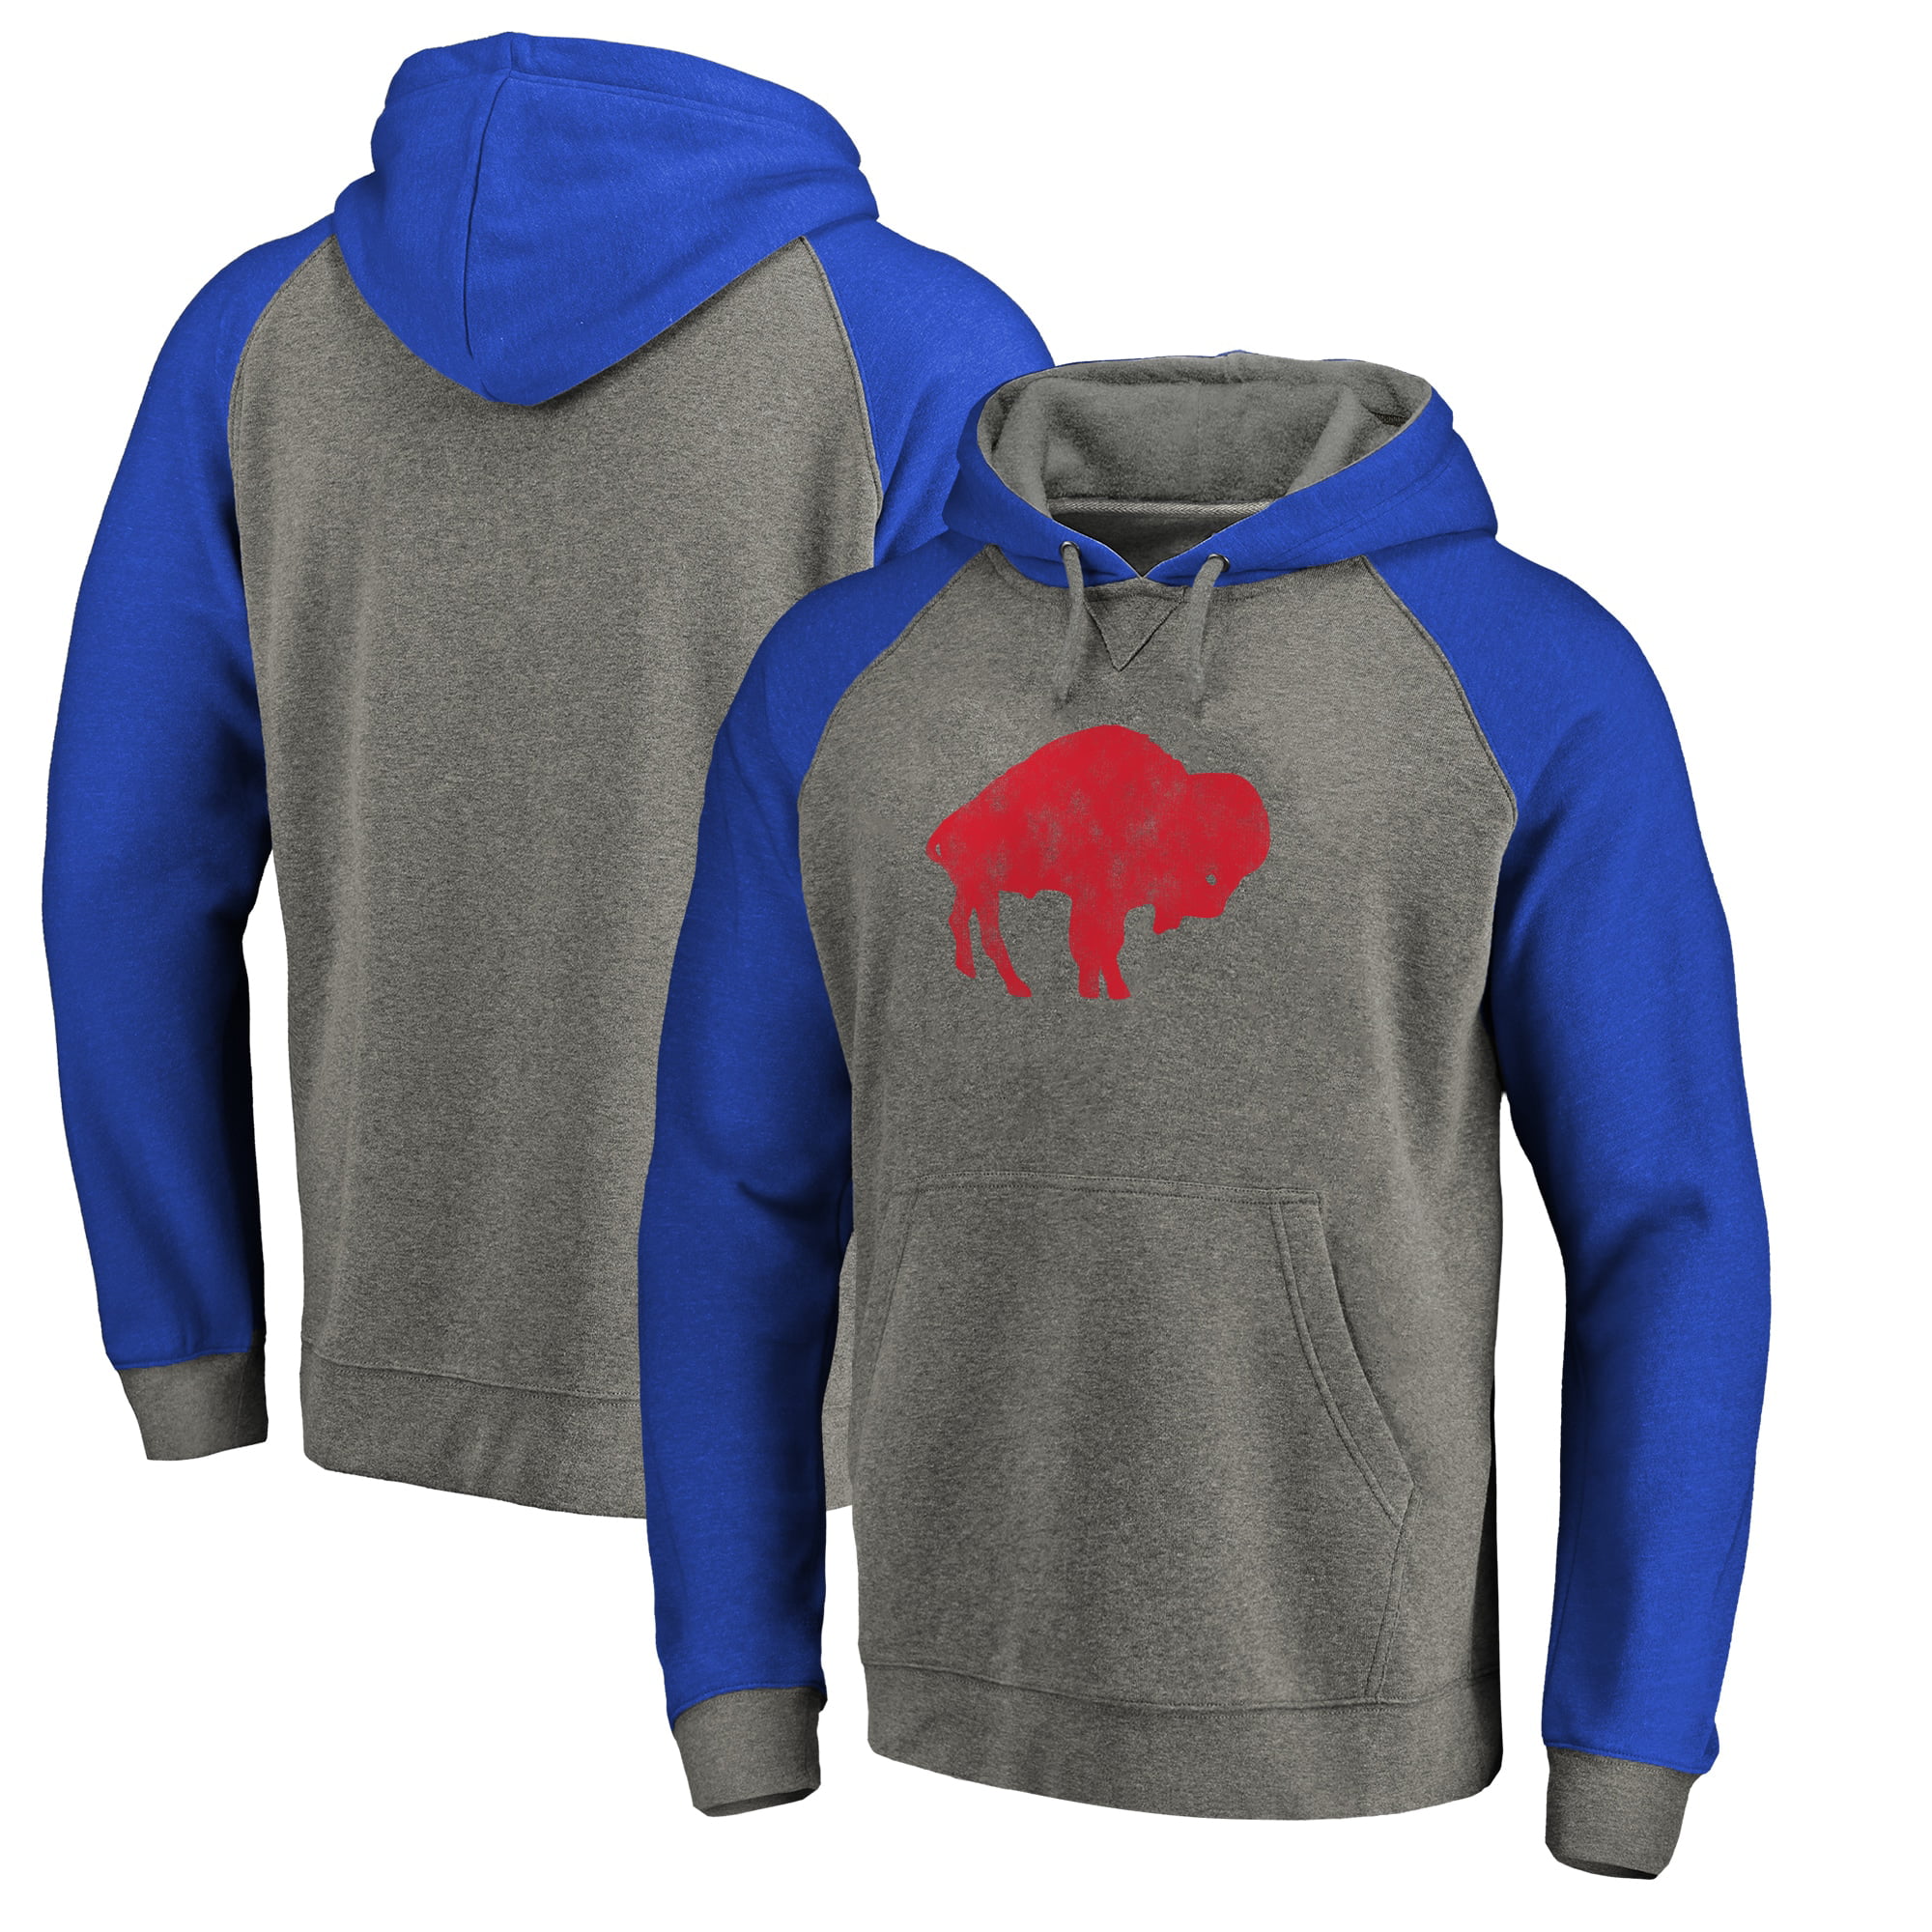 buffalo bills gray hoodie